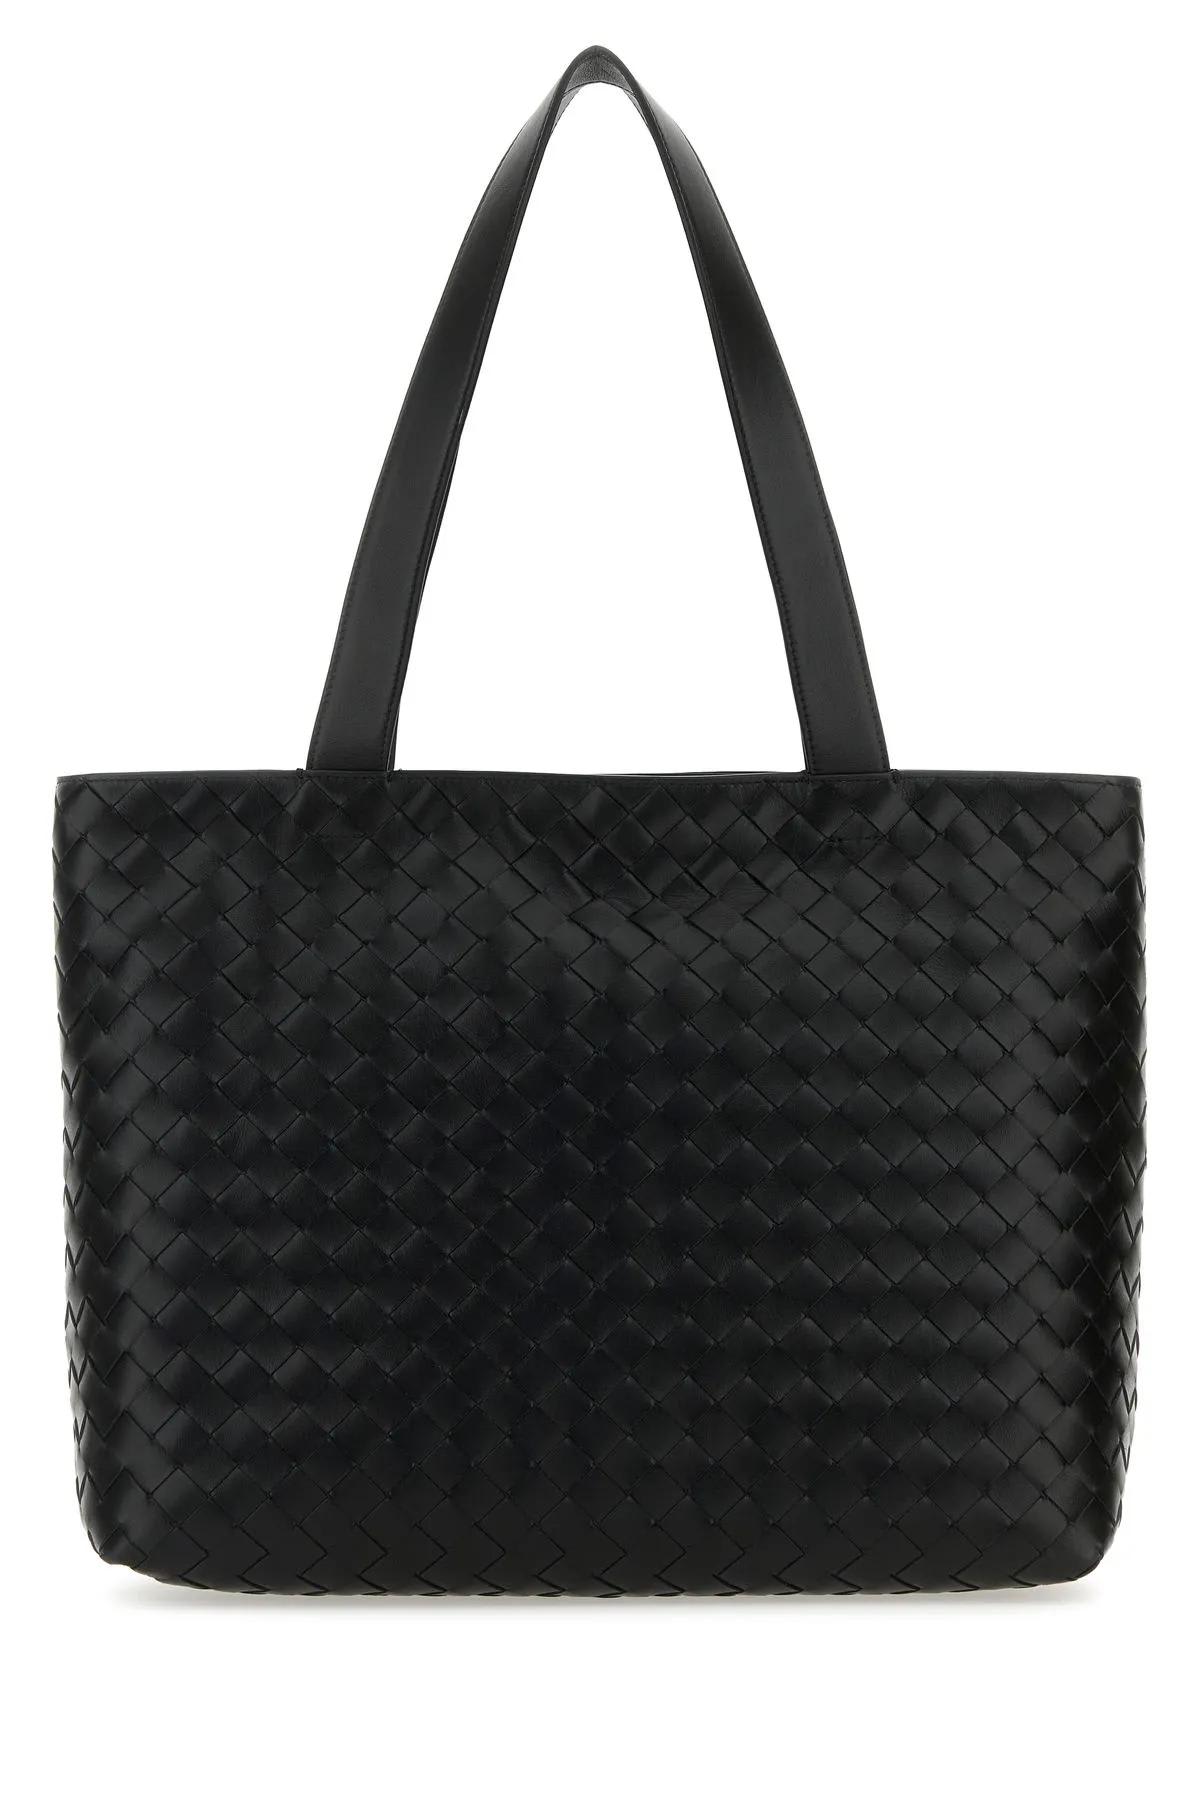 Shop Bottega Veneta Black Leather Small Intrecciato Shopping Bag